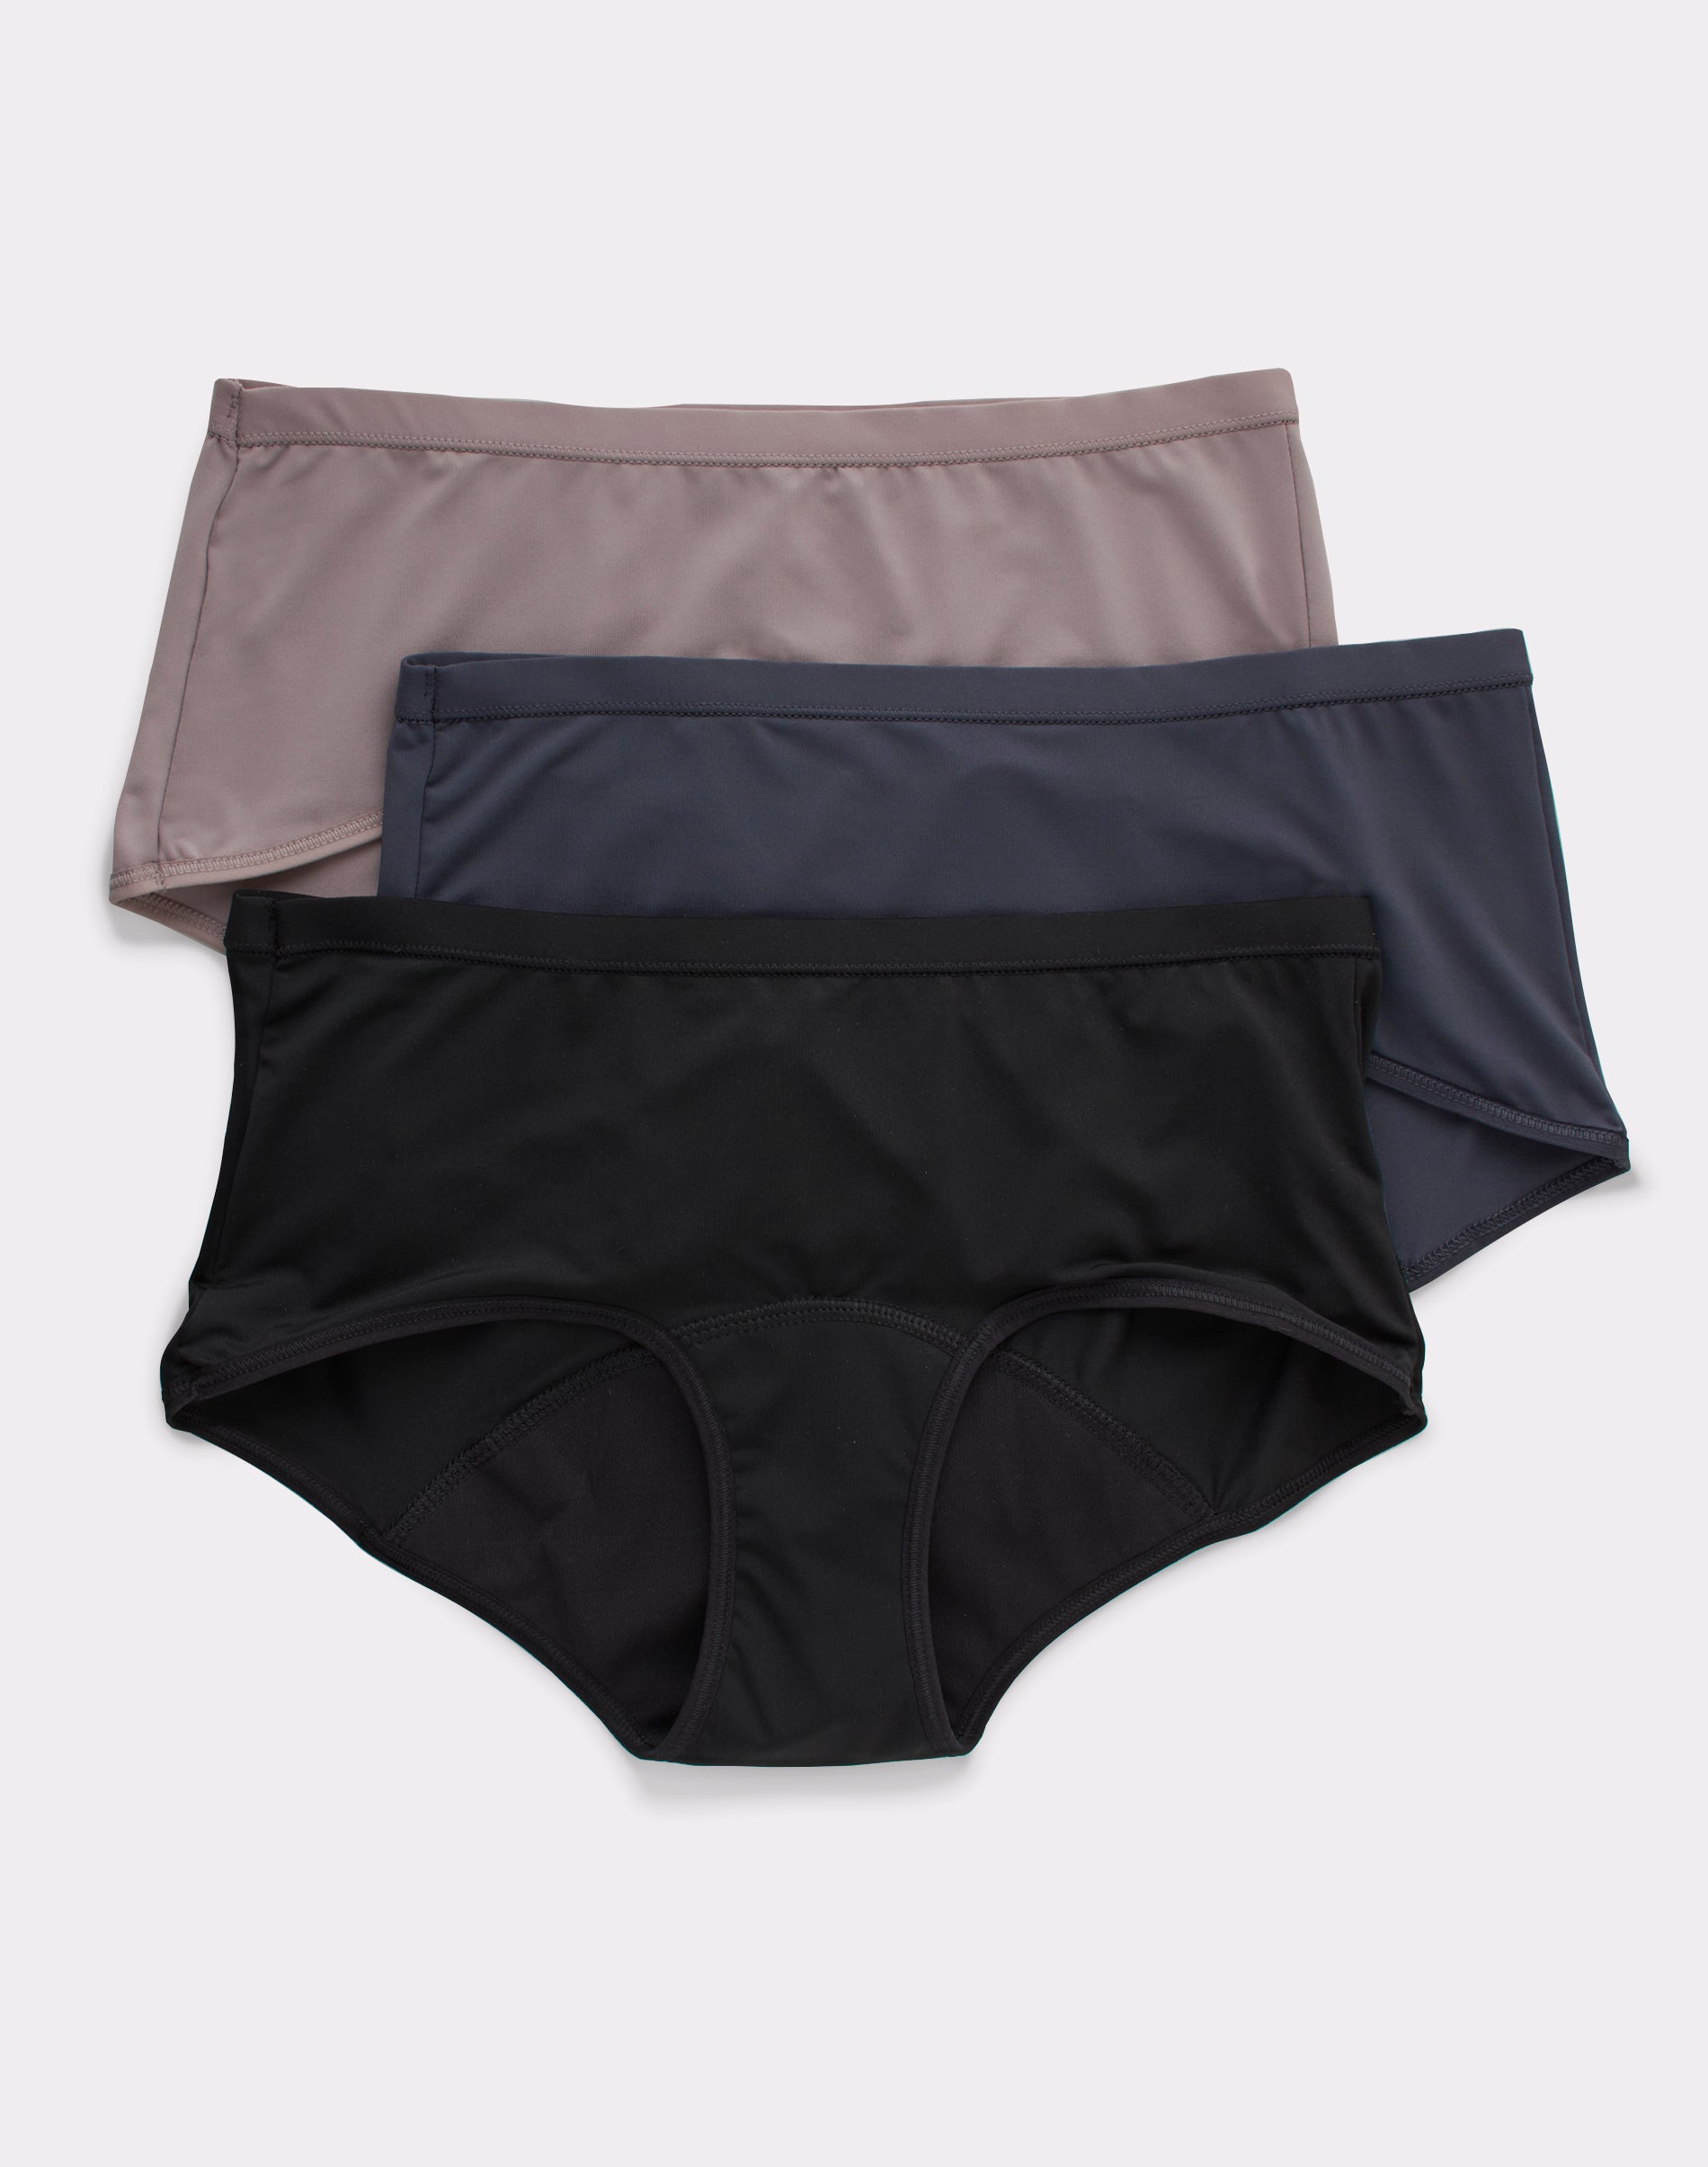 Hanes Comfort, Period.™ Boy Shorts Period Underwear, Light Leaks, Black/Assorted Grays, 3-Pack